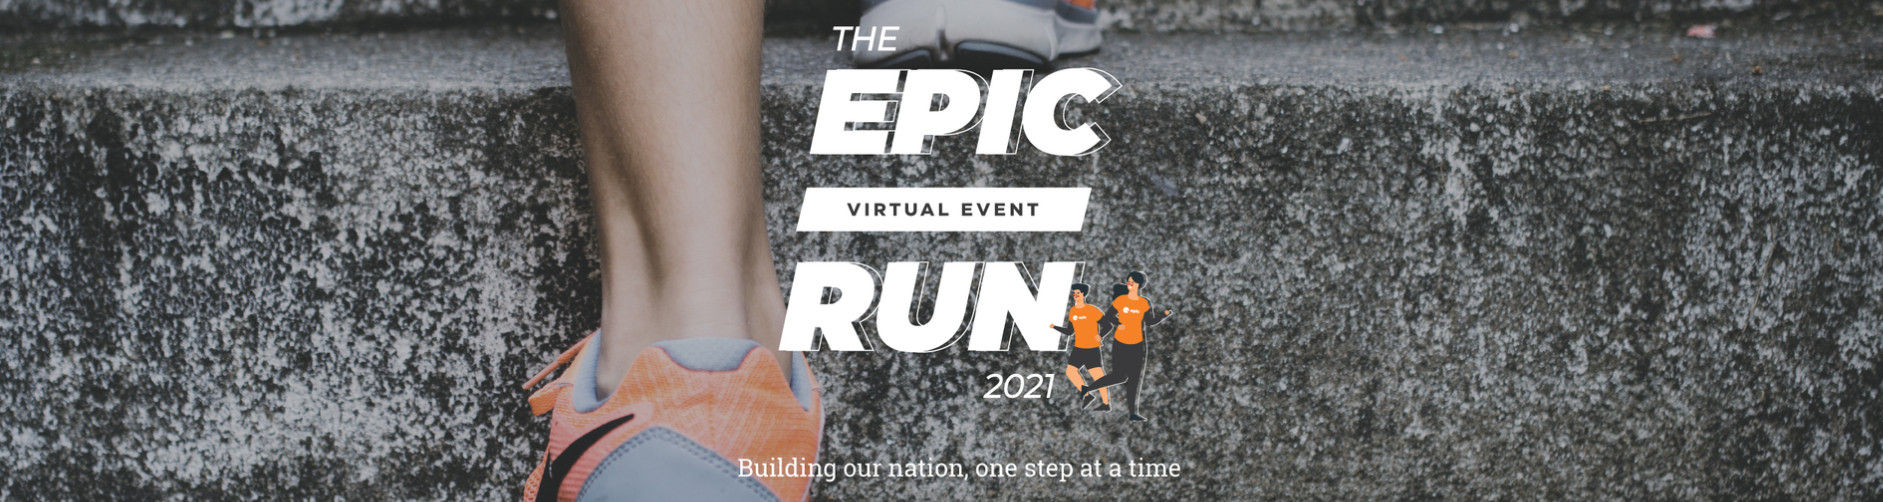 The Epic Run 2021